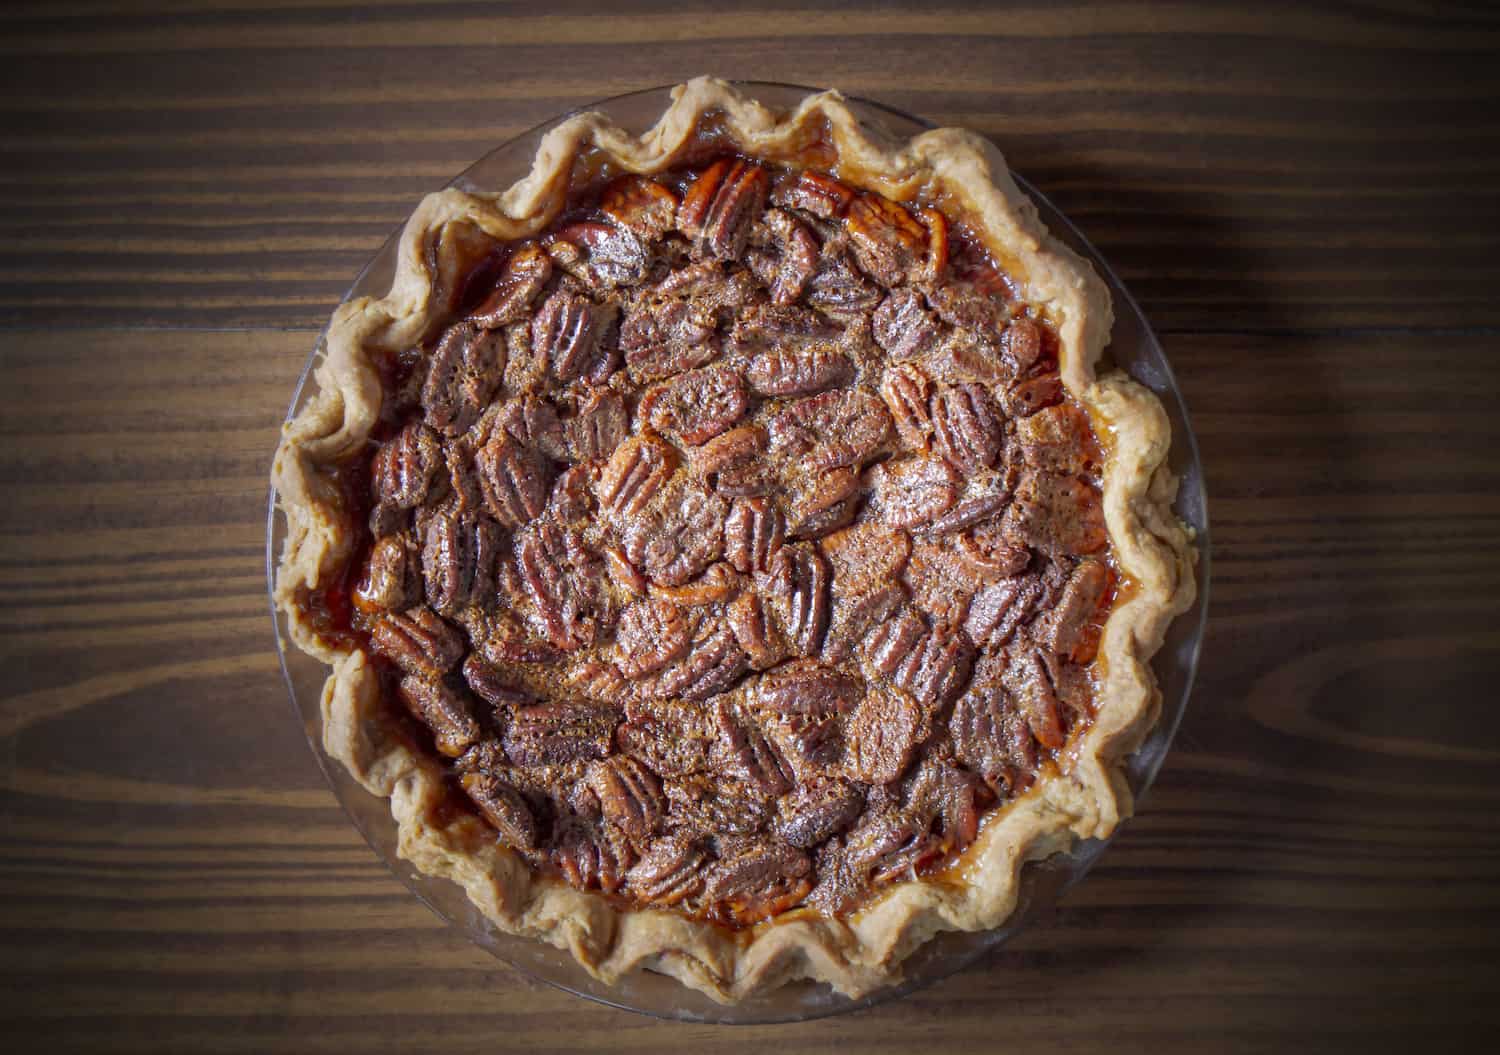 Bourbon pecan pie by Chef Sara Bradley